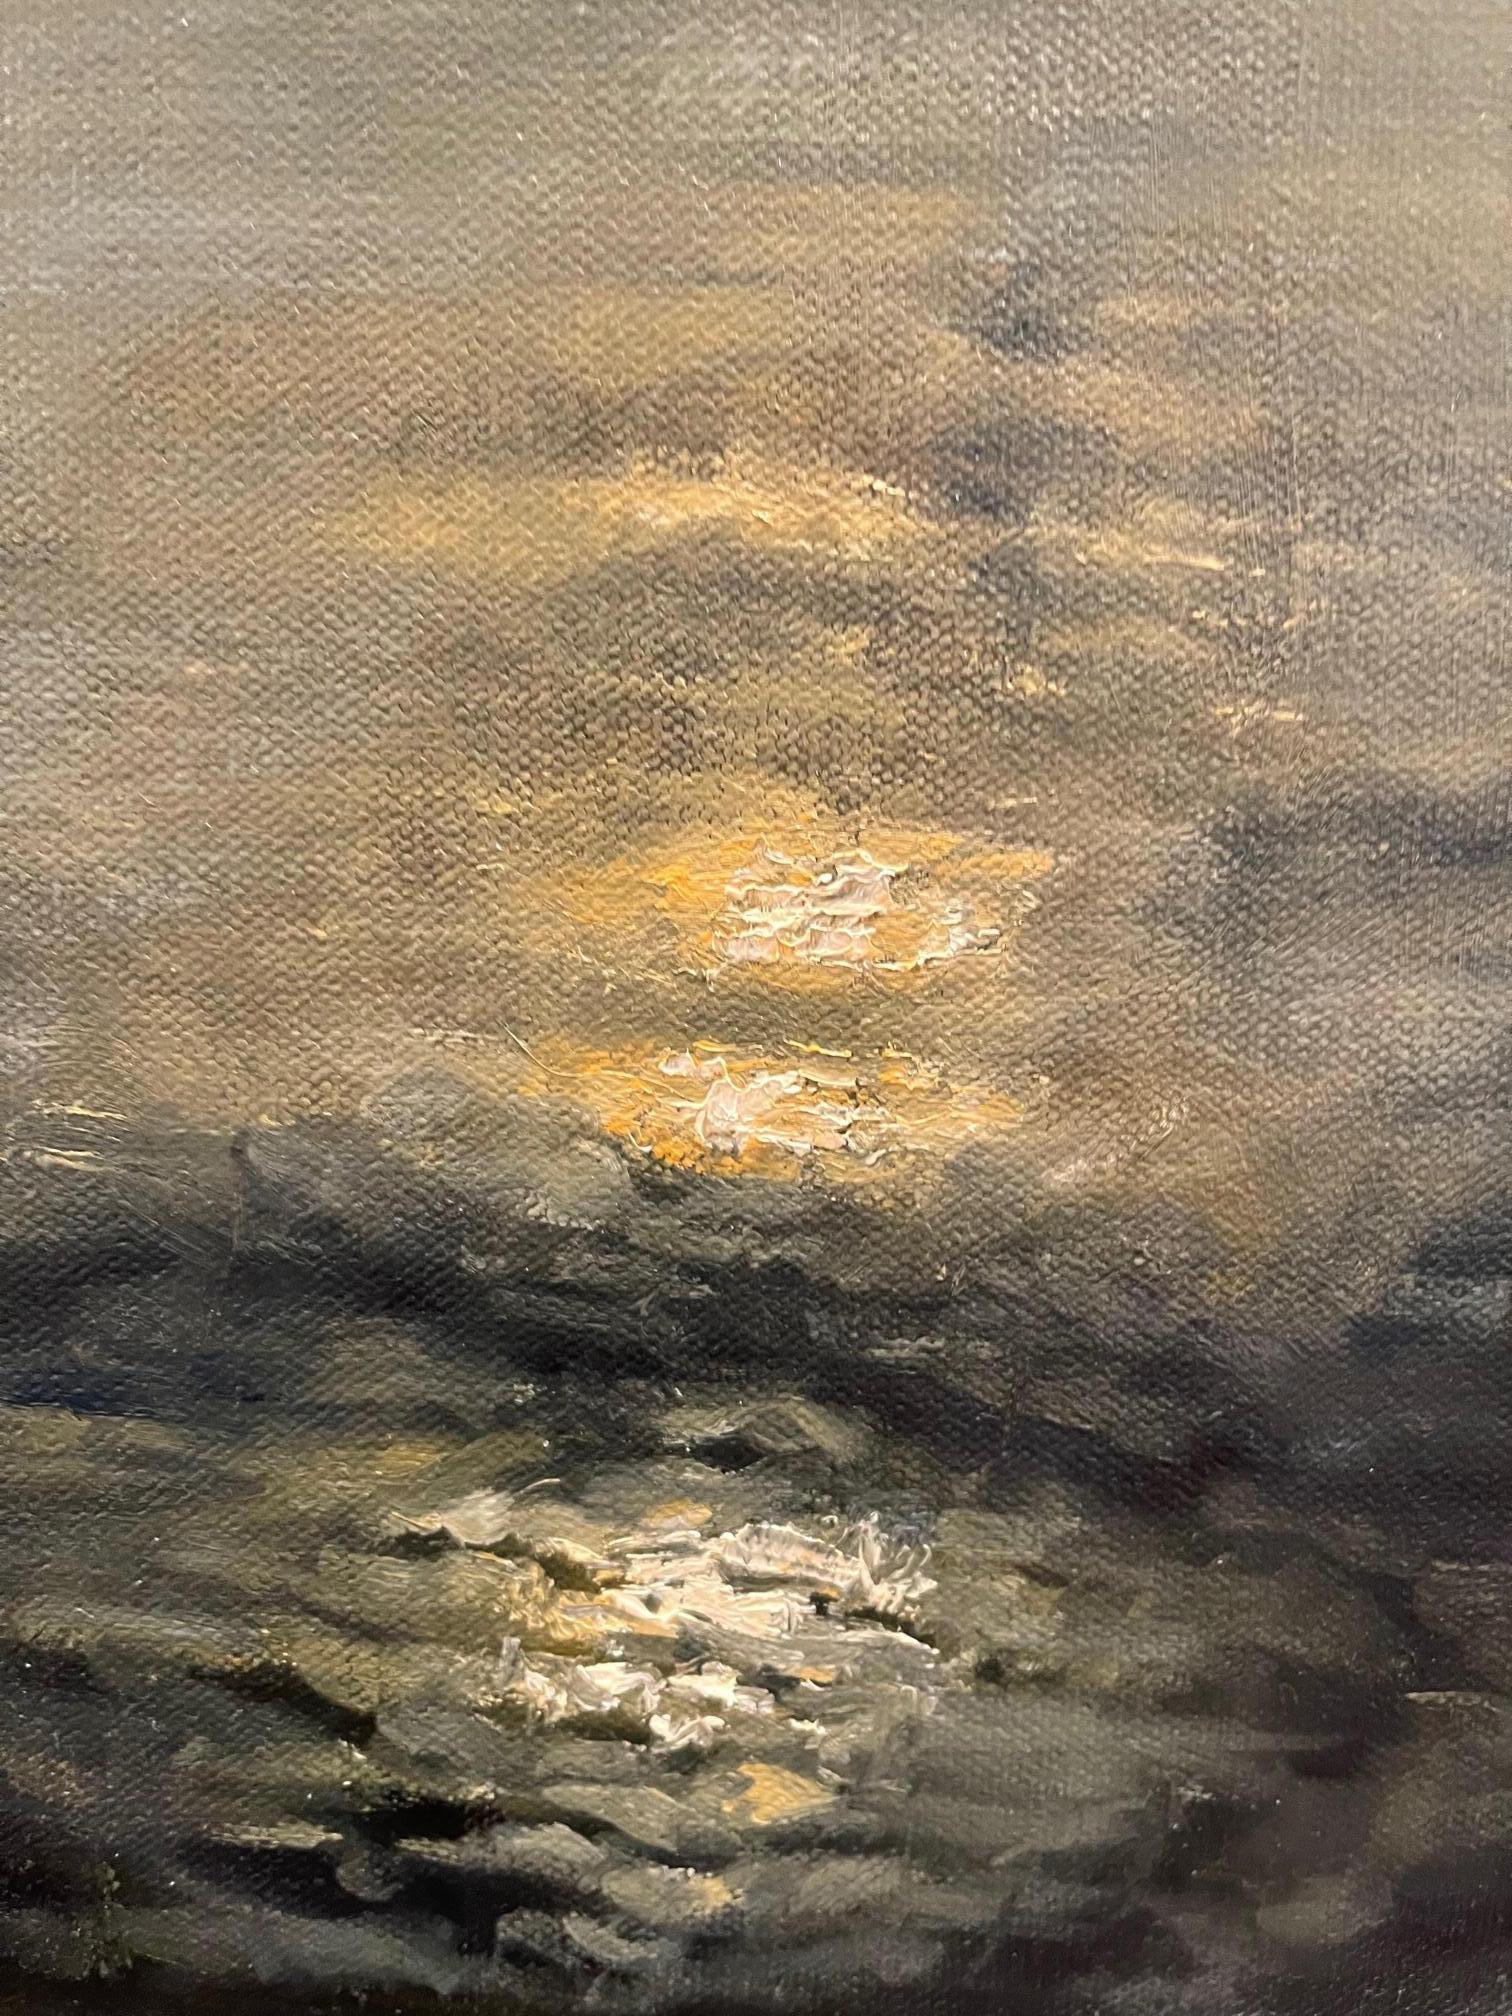 Oil on Canvas 